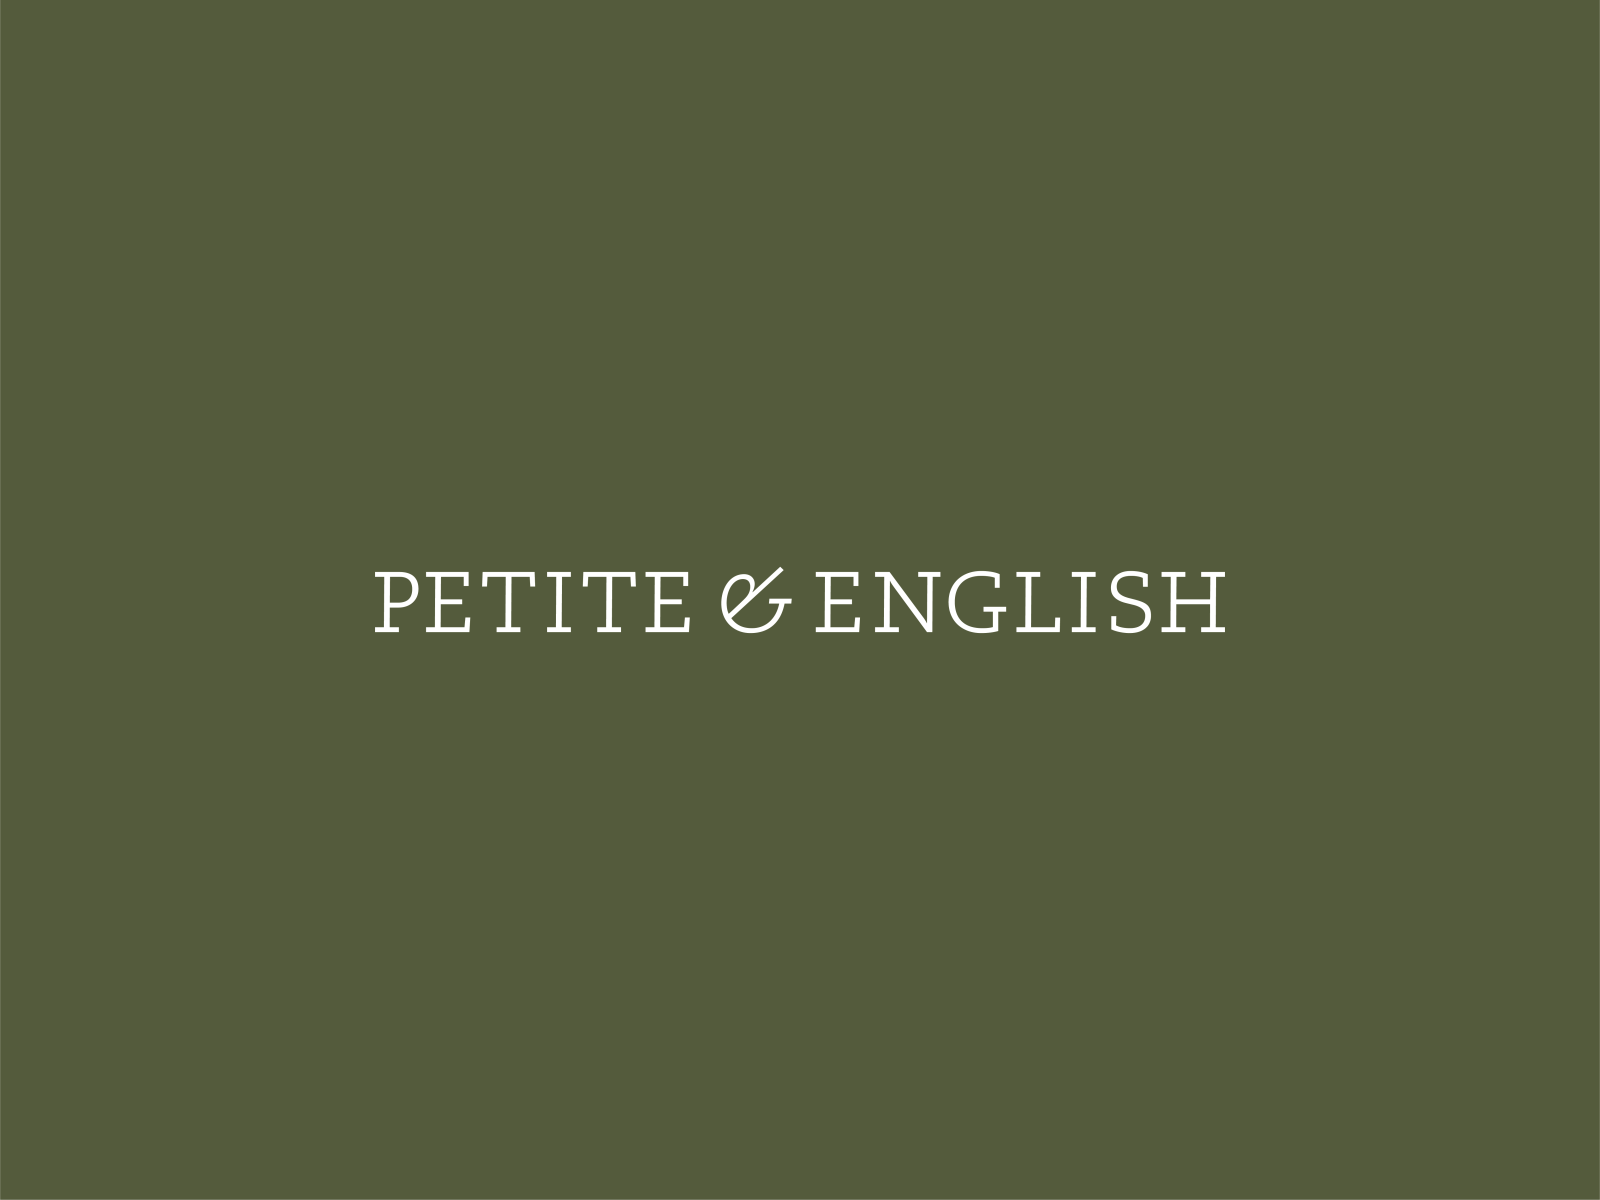 Petite & English: Logo Design